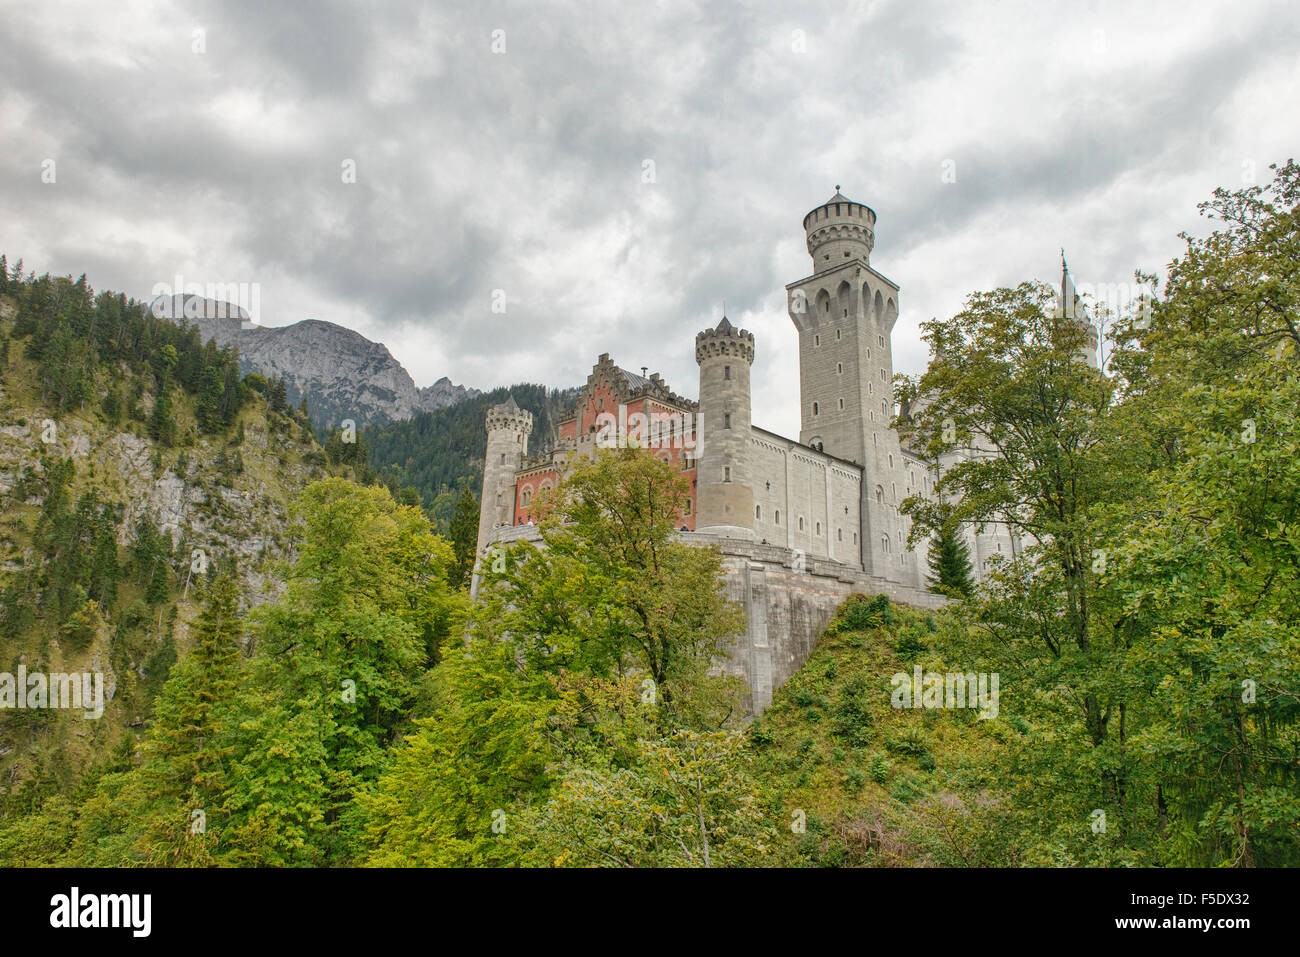 The fairy tale Schloss Neuschwanstein castle in Schwangau, Bavaria, Germany Stock Photo